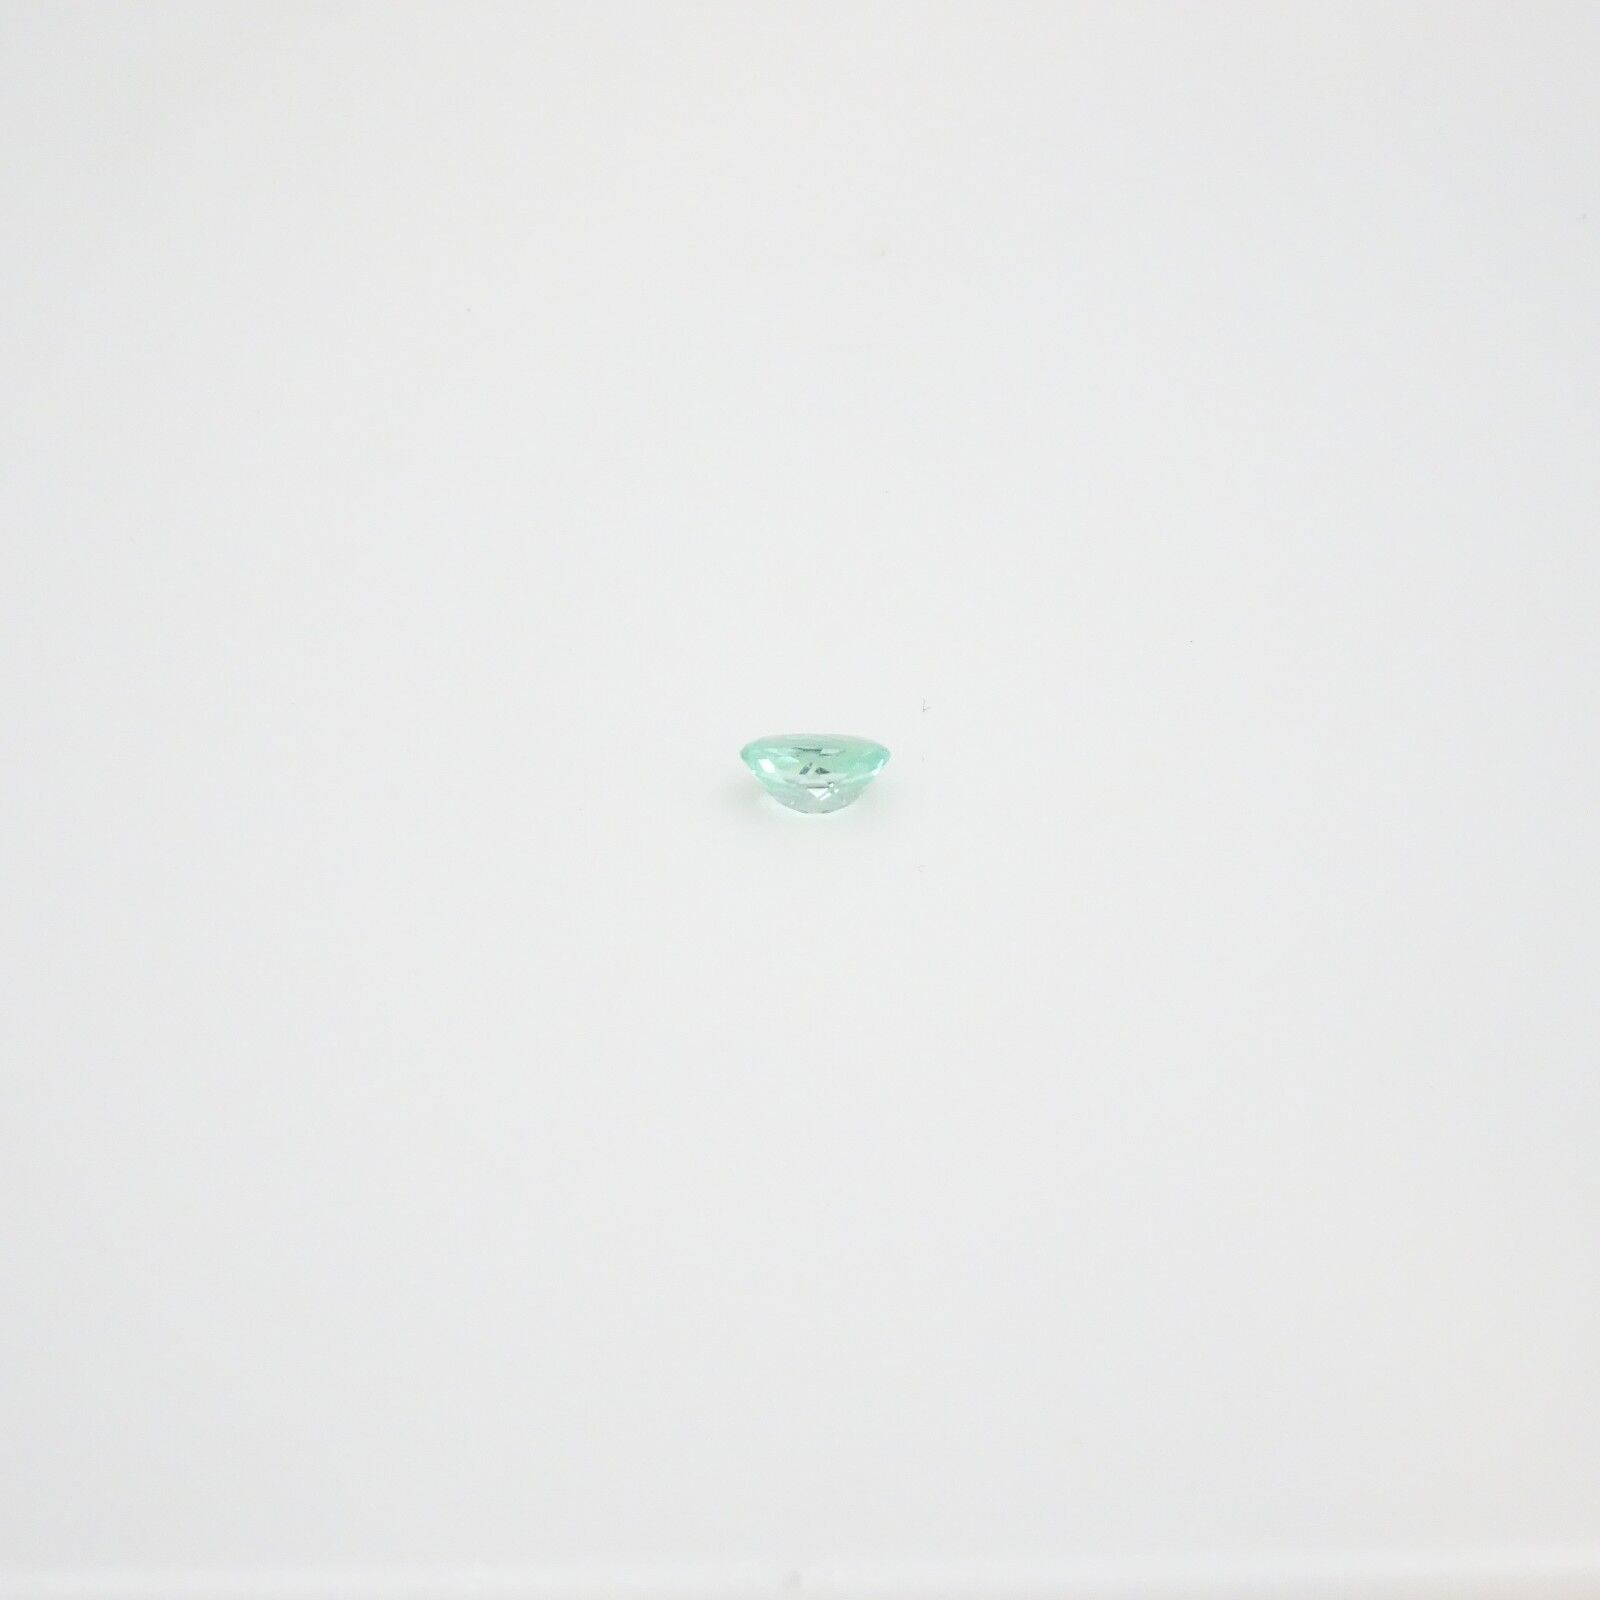 Paraiba - Copper Bearing - Tourmaline - 0.80ct Oval cut - 7x5mm - Loose Gemstone Paraiba - фотография #8